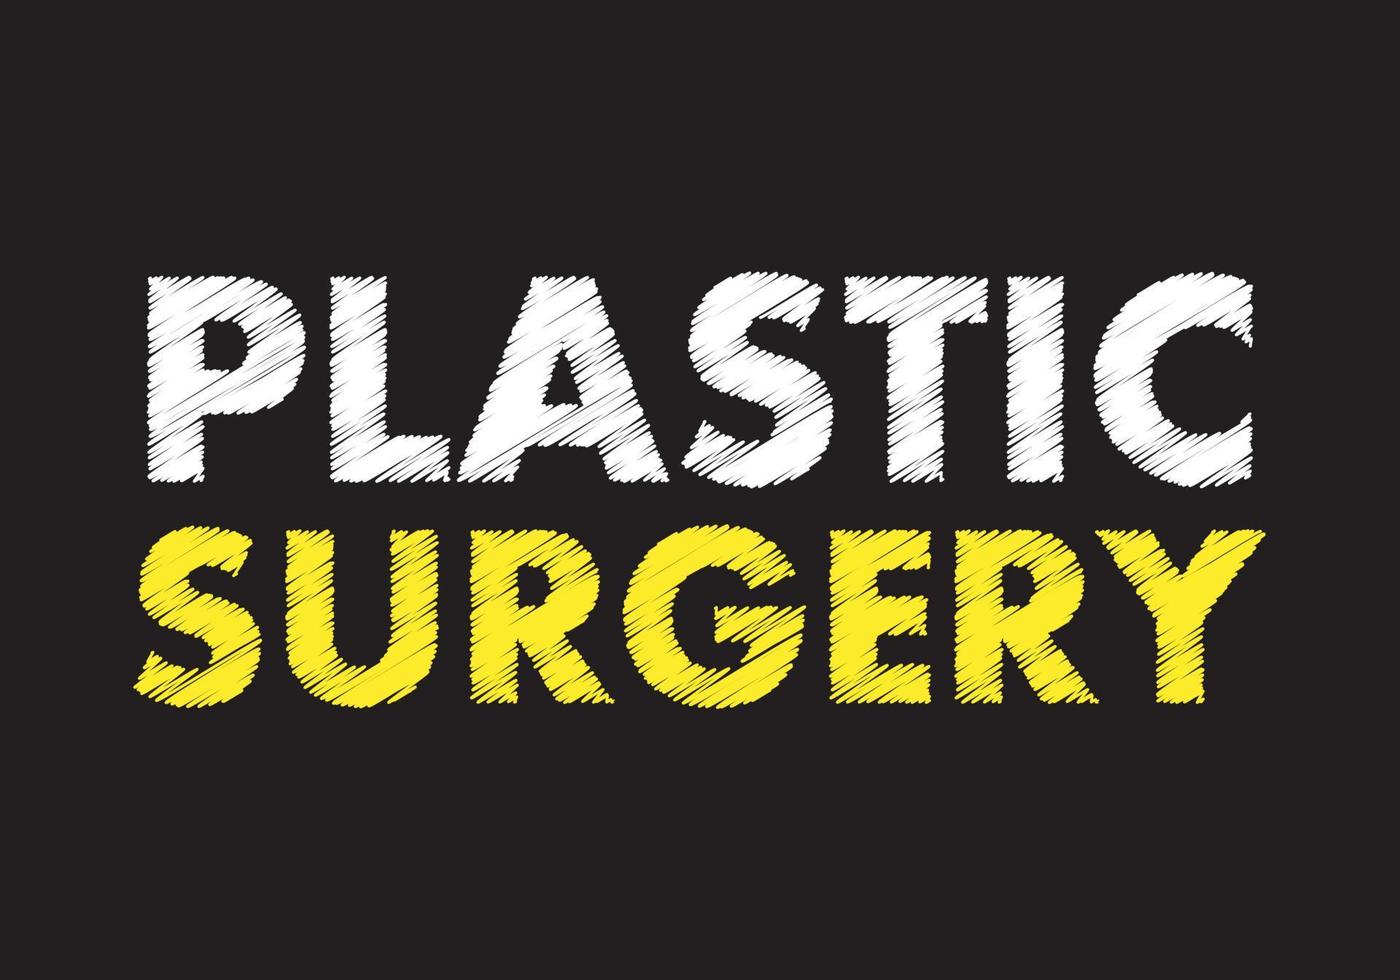 Plastic surgery writing text on black chalkboard. vector illustration